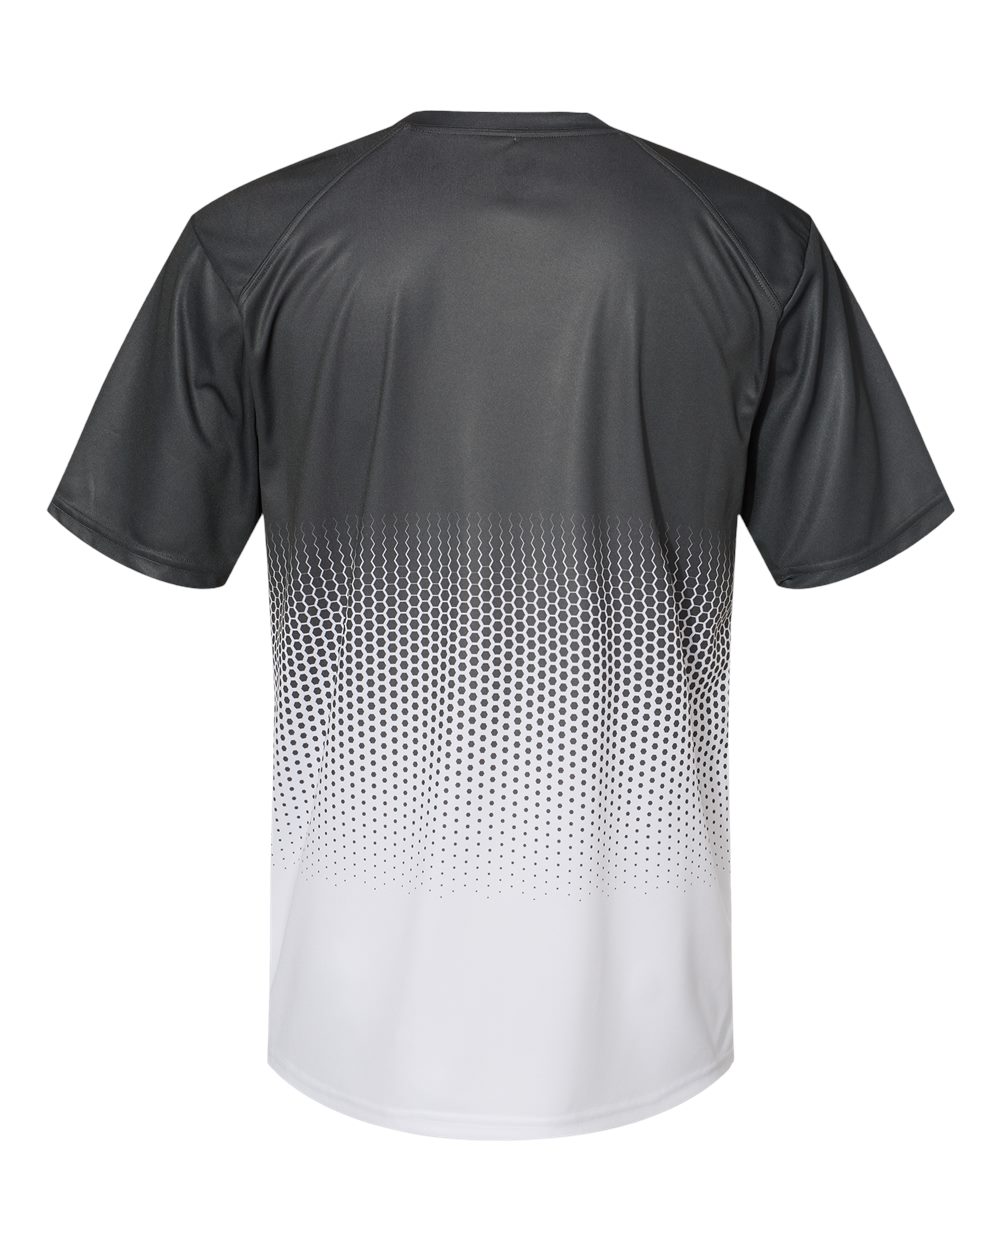 Badger Mens Short Sleeve Sport Hex 2.0 T-Shirt 4220 up to 4XL | eBay